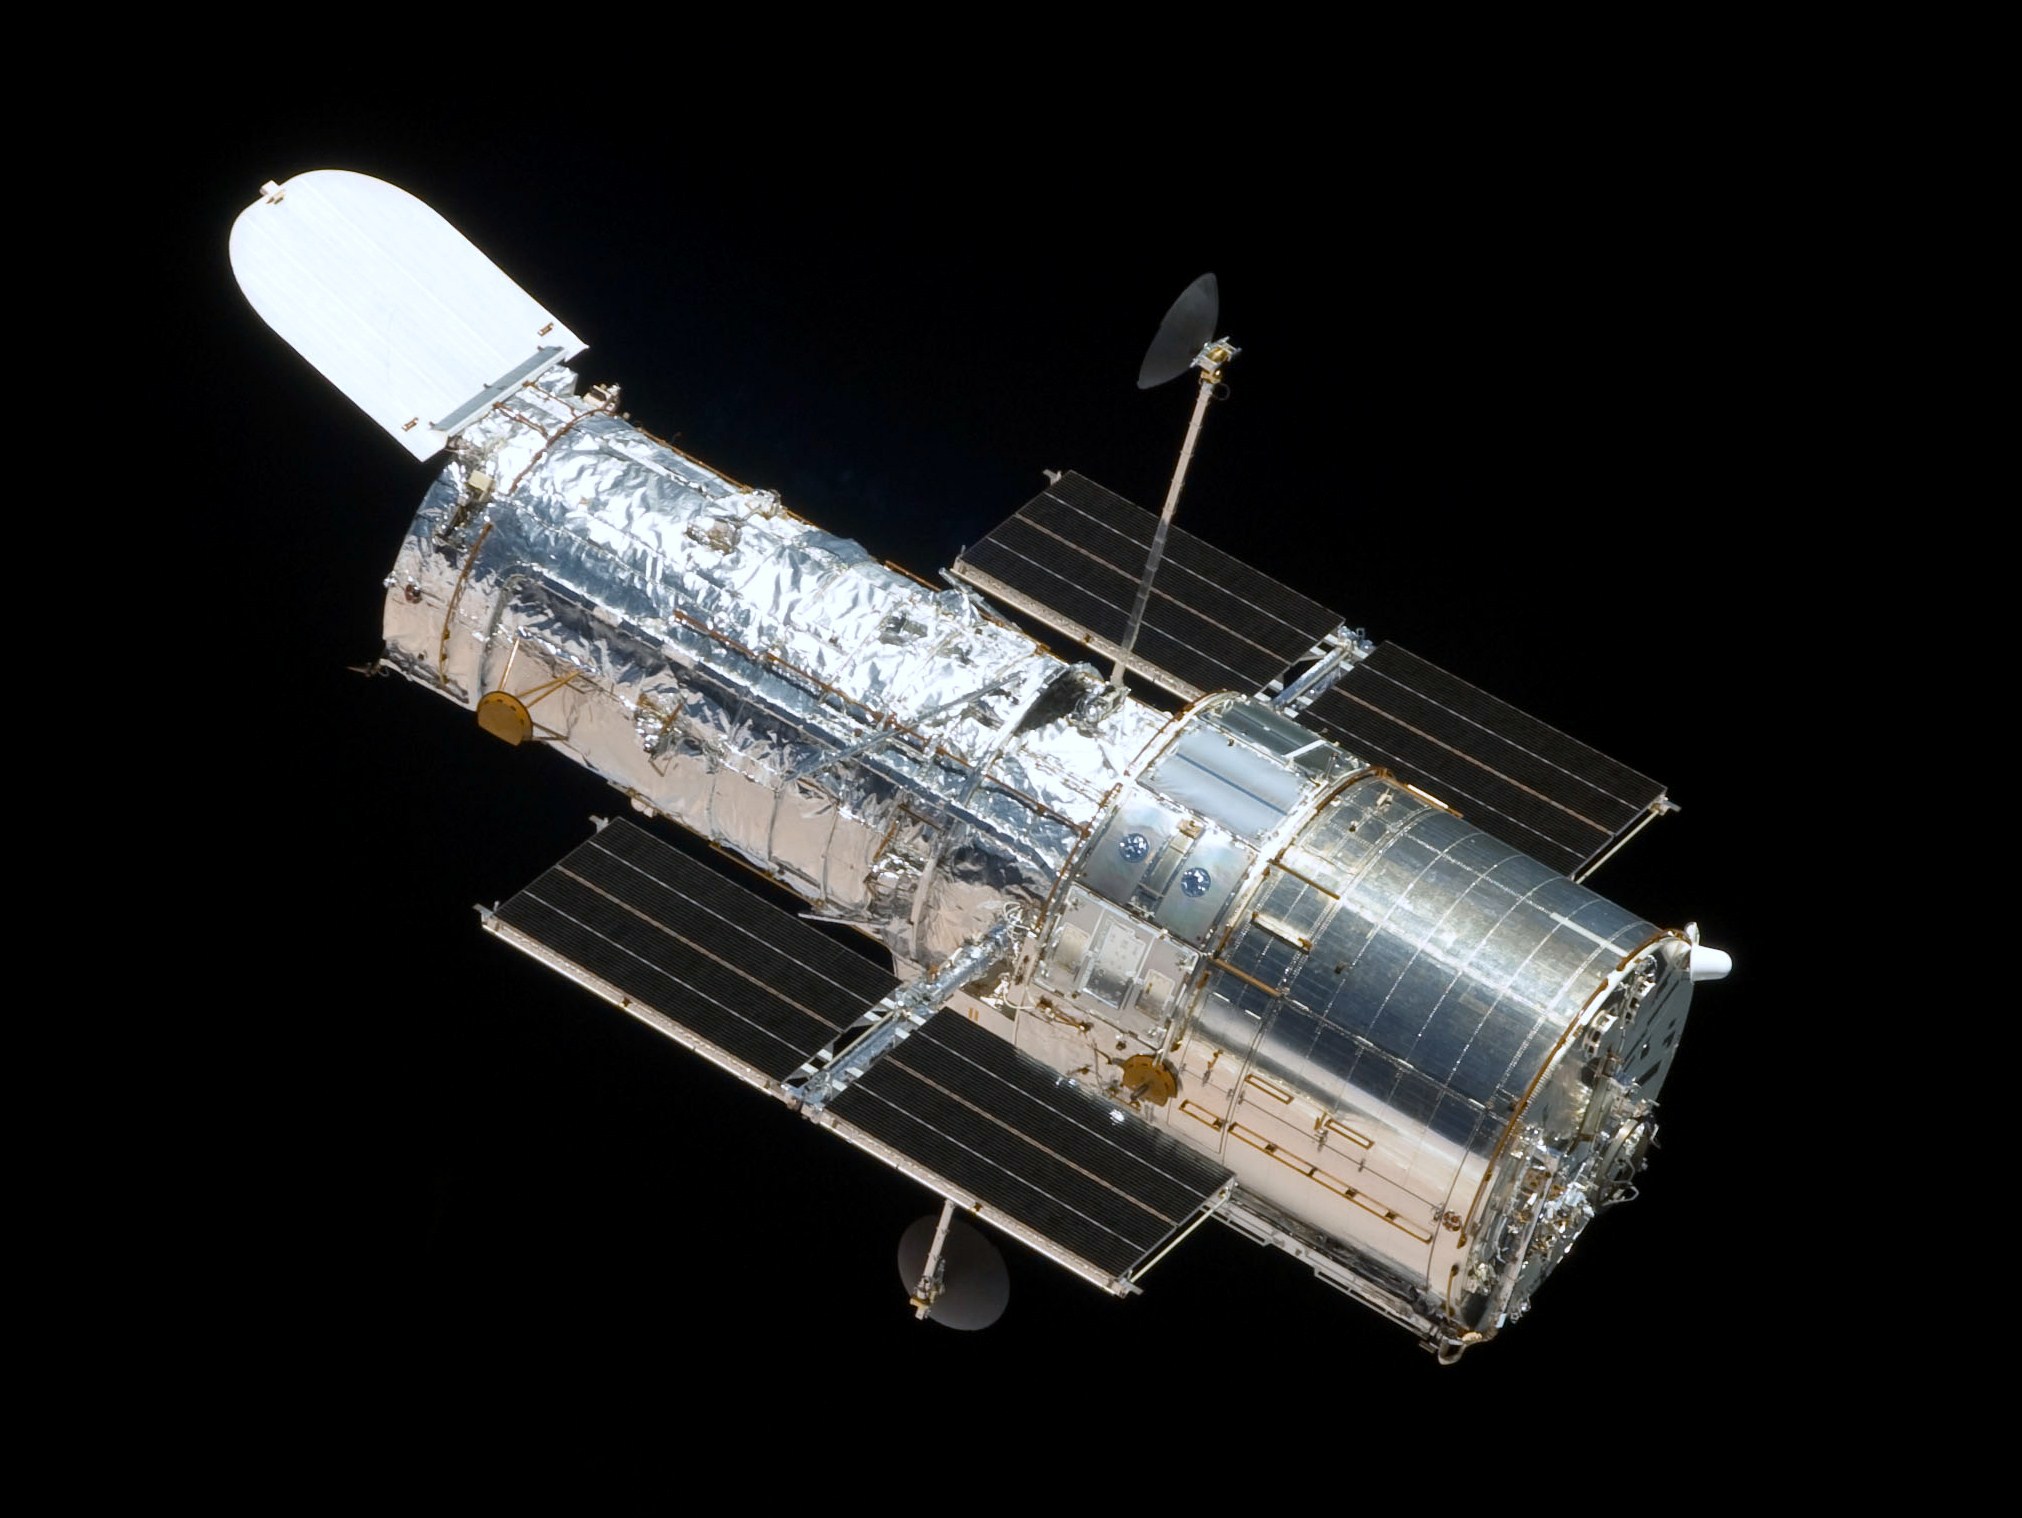 Hubble Space Telescope - Wikipedia